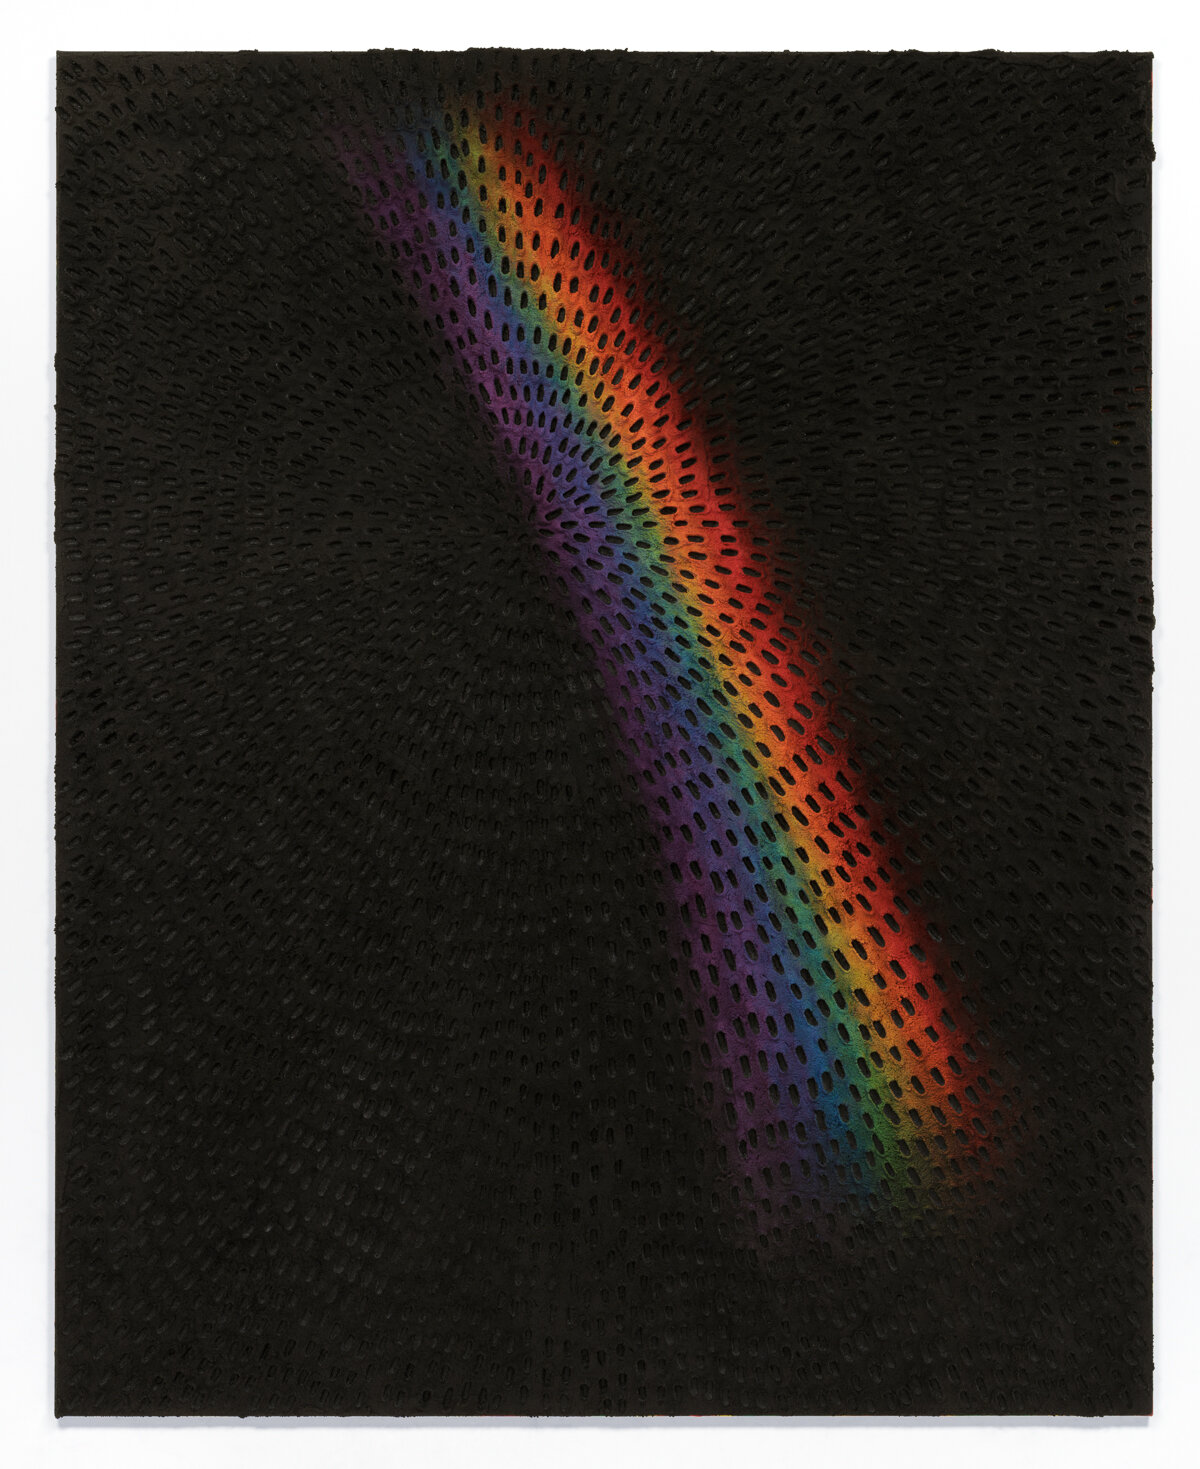  Black Rainbow, 2017  Sand, acrylic and oil on linen  92 x 74 inches 